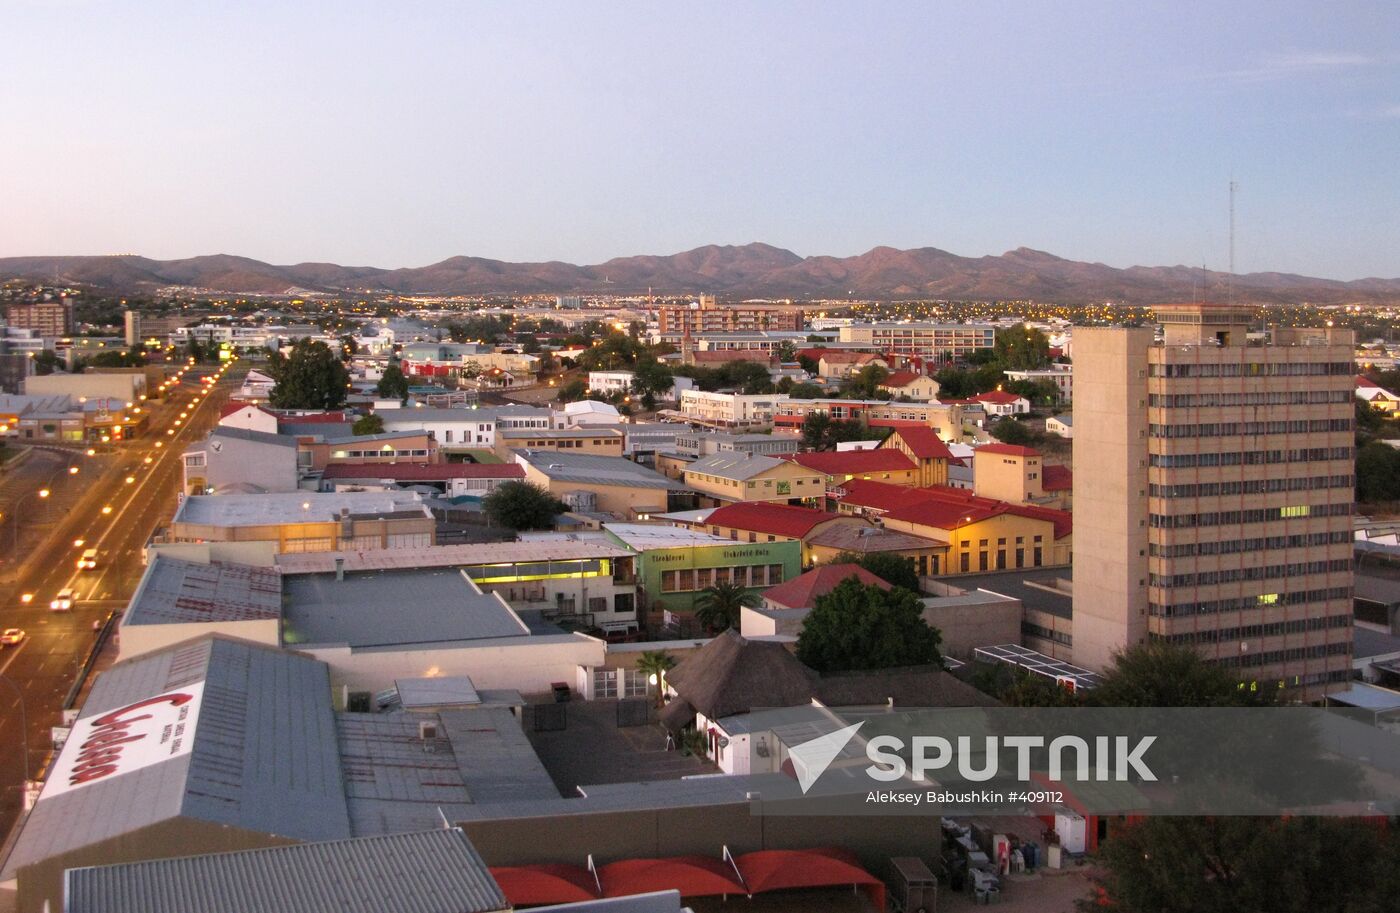 Windhoek, Namibia's capital